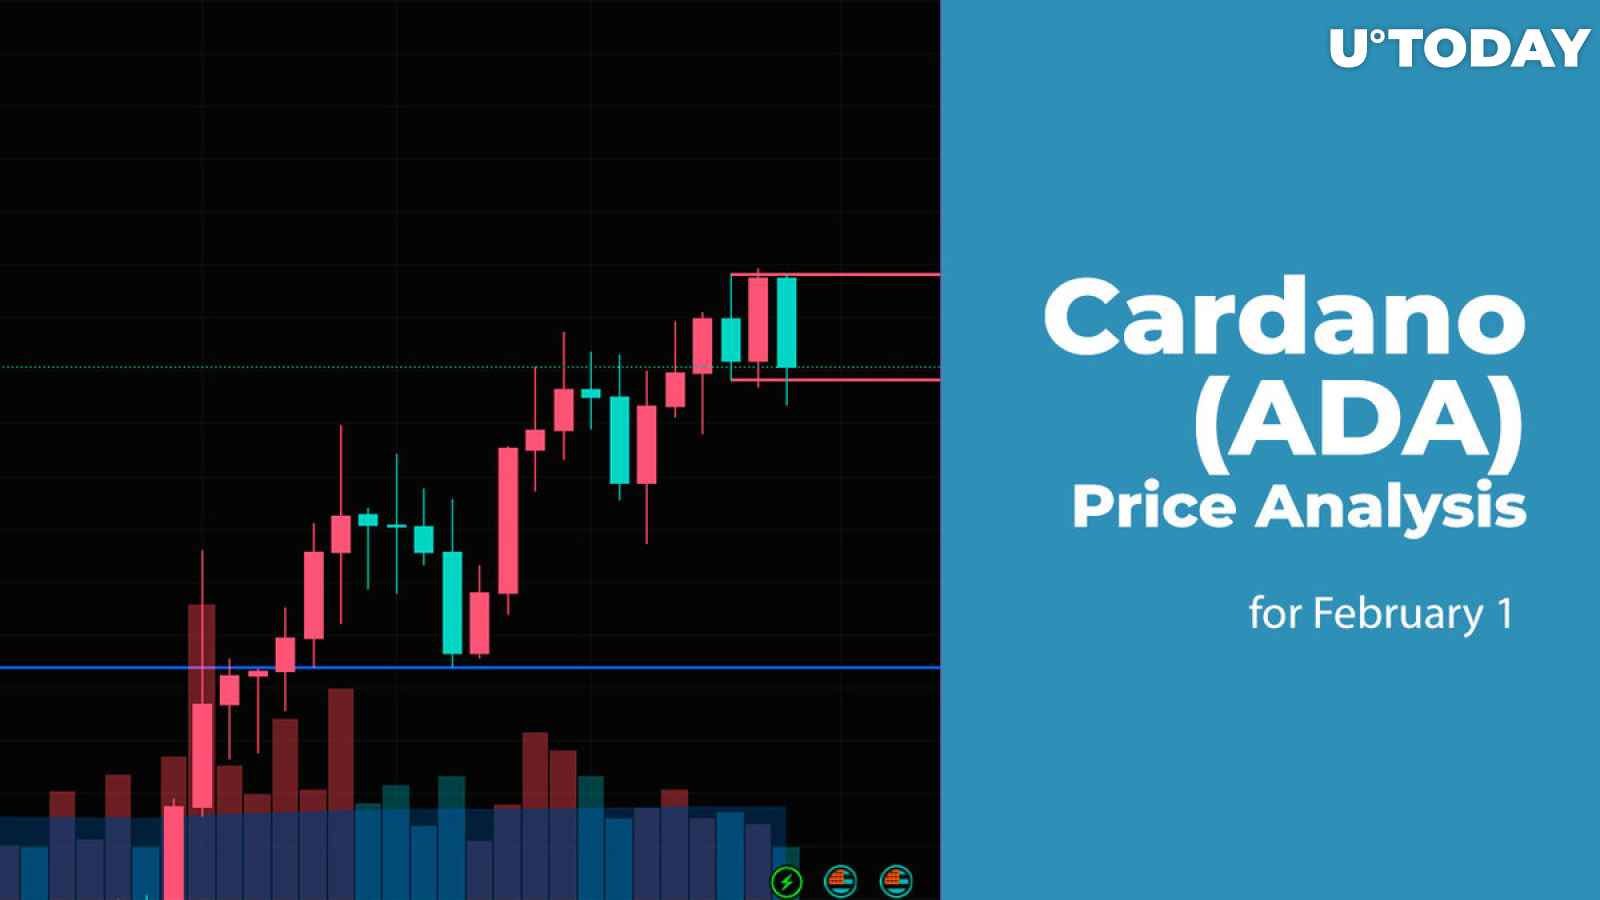 Cardano (ADA) Price Analysis for February 1